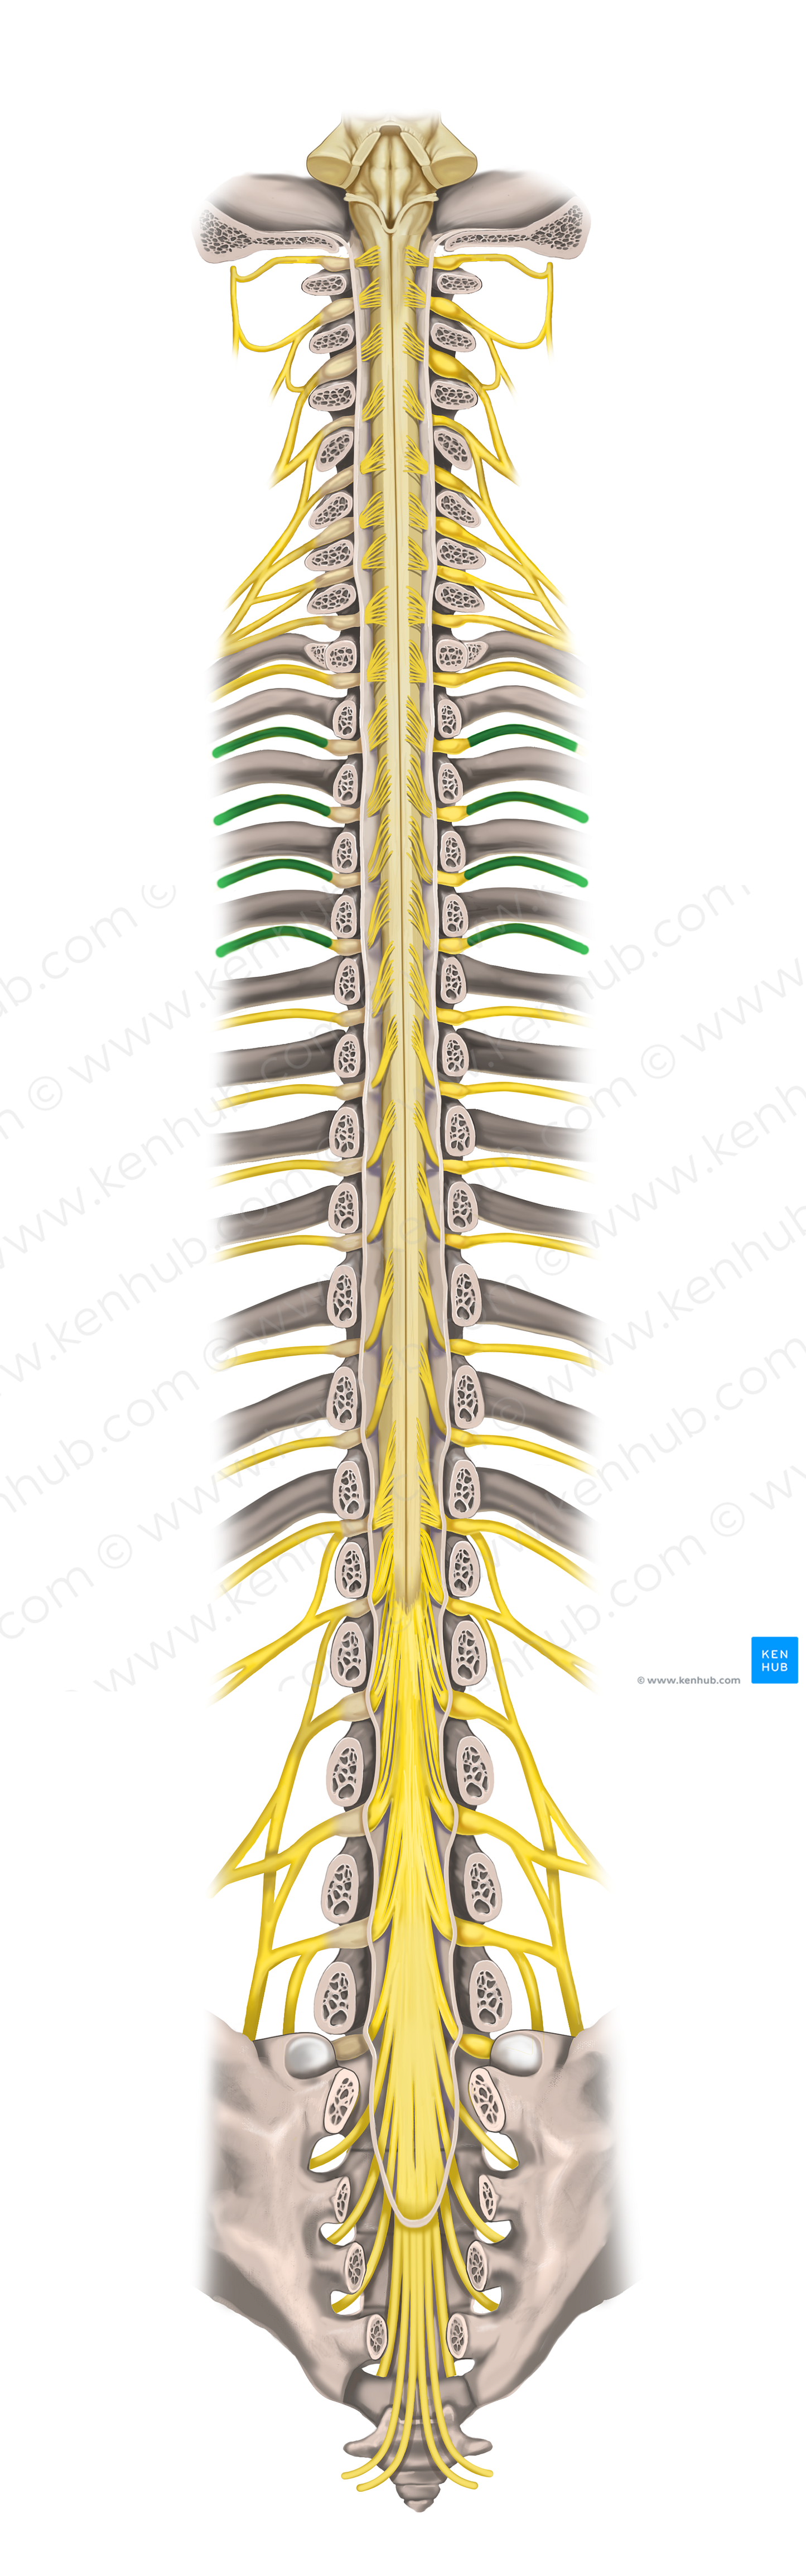 2nd-5th intercostal nerves (#18426)